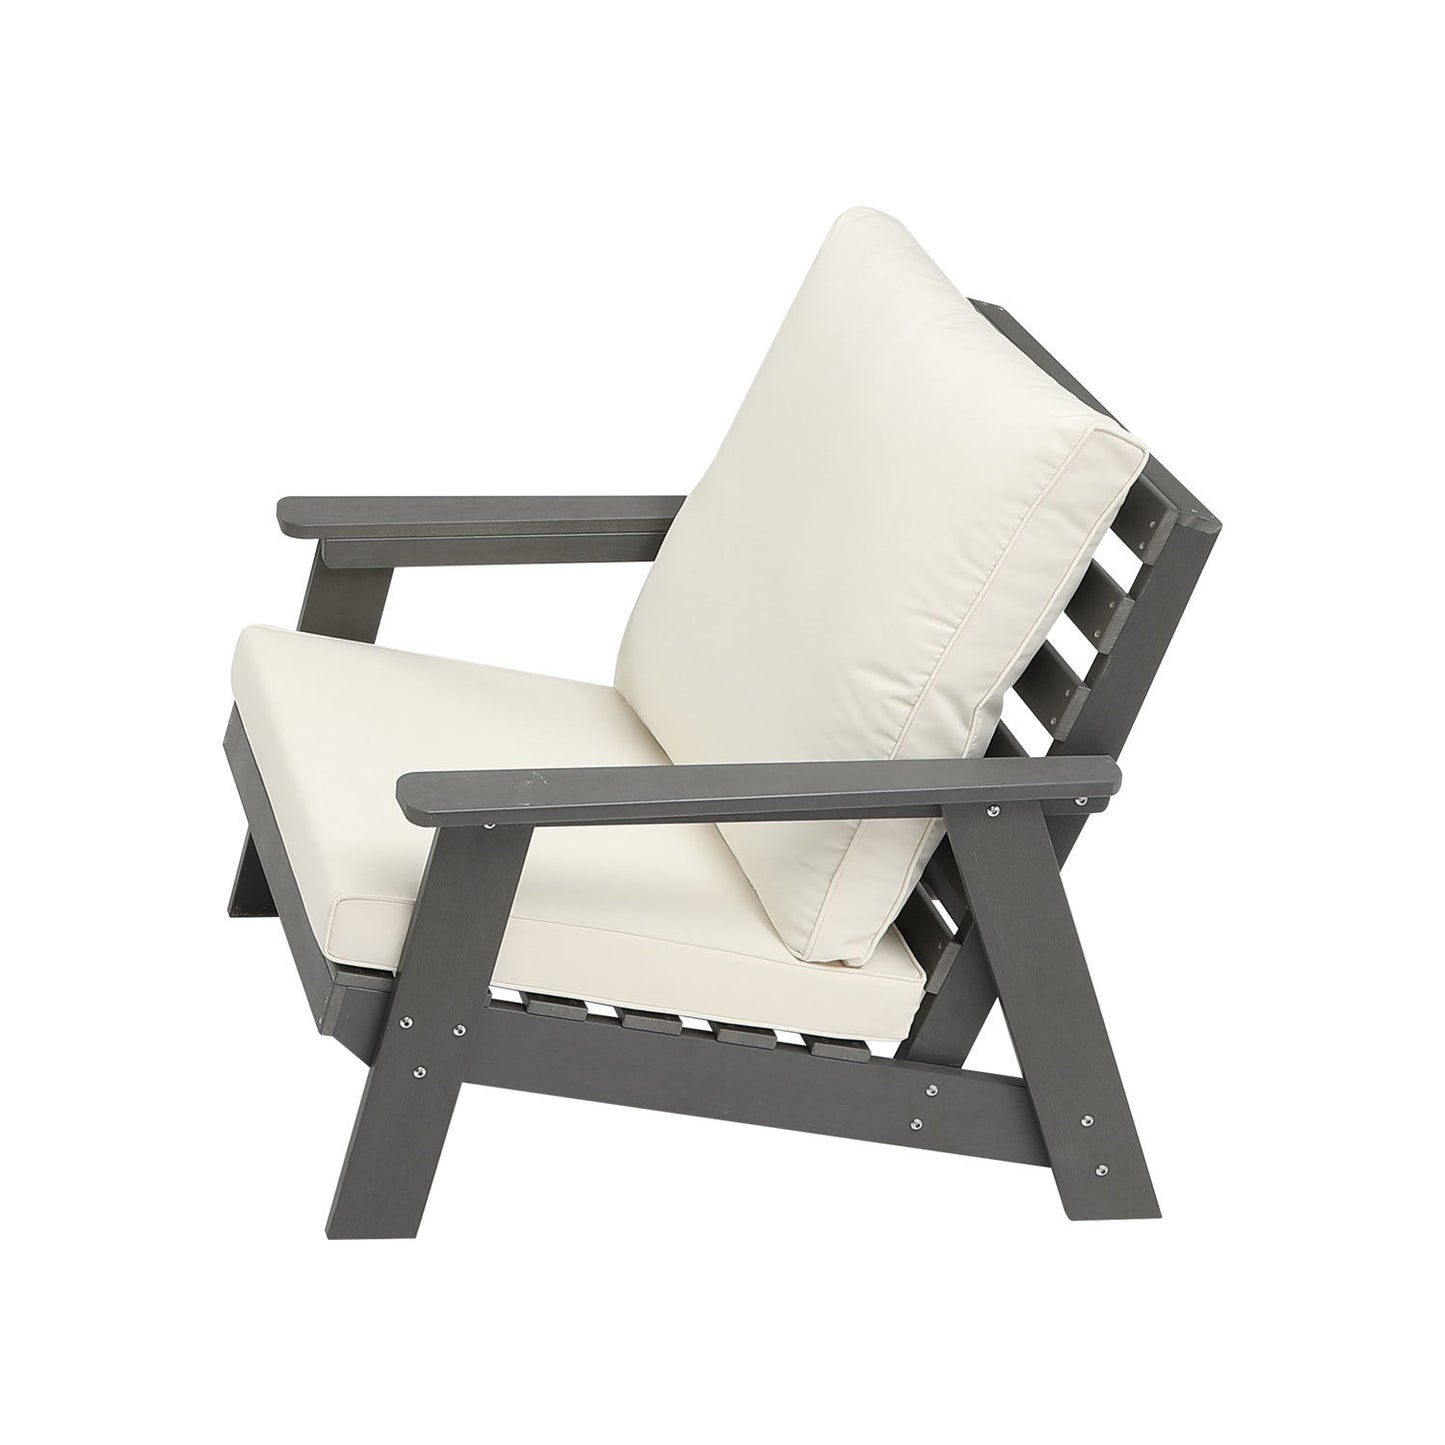 Single Sofa Chair with Cushion Grey/Beige l HDPE